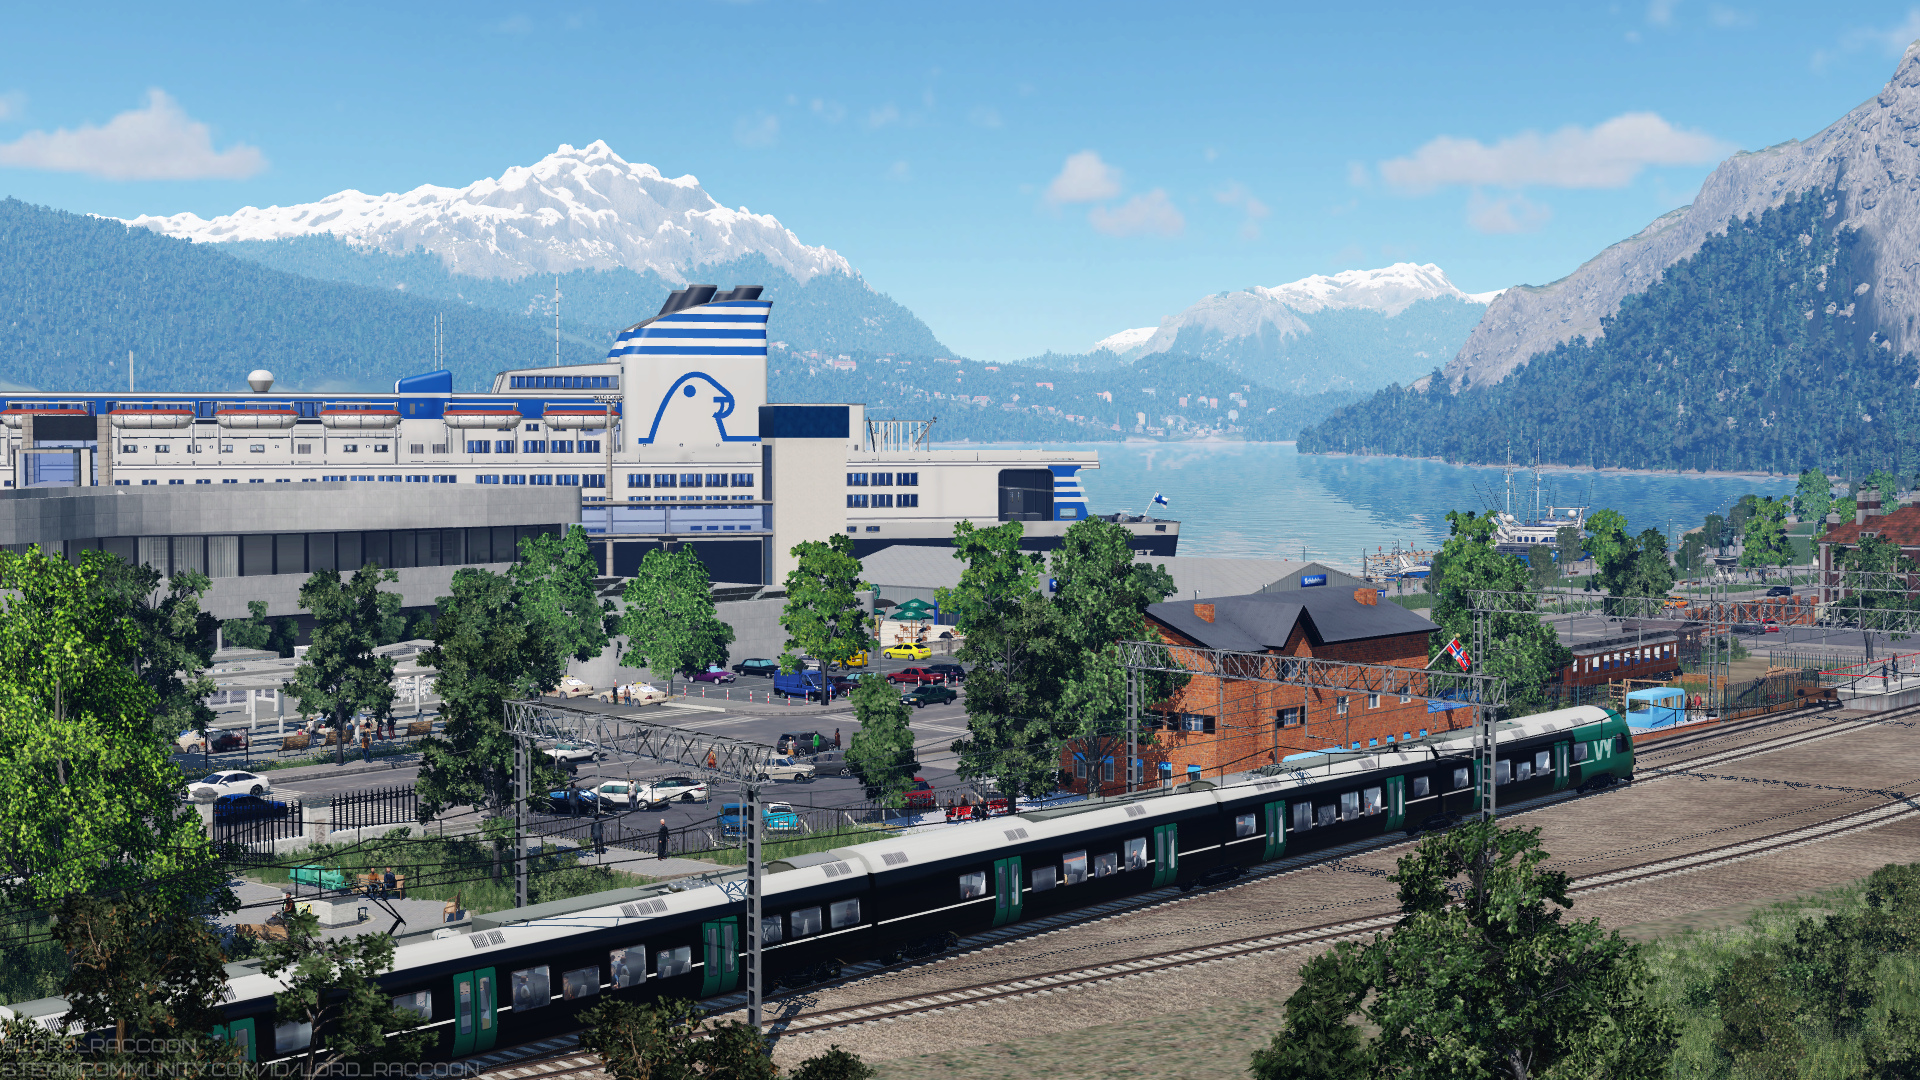 [TpF1] Train station near the port